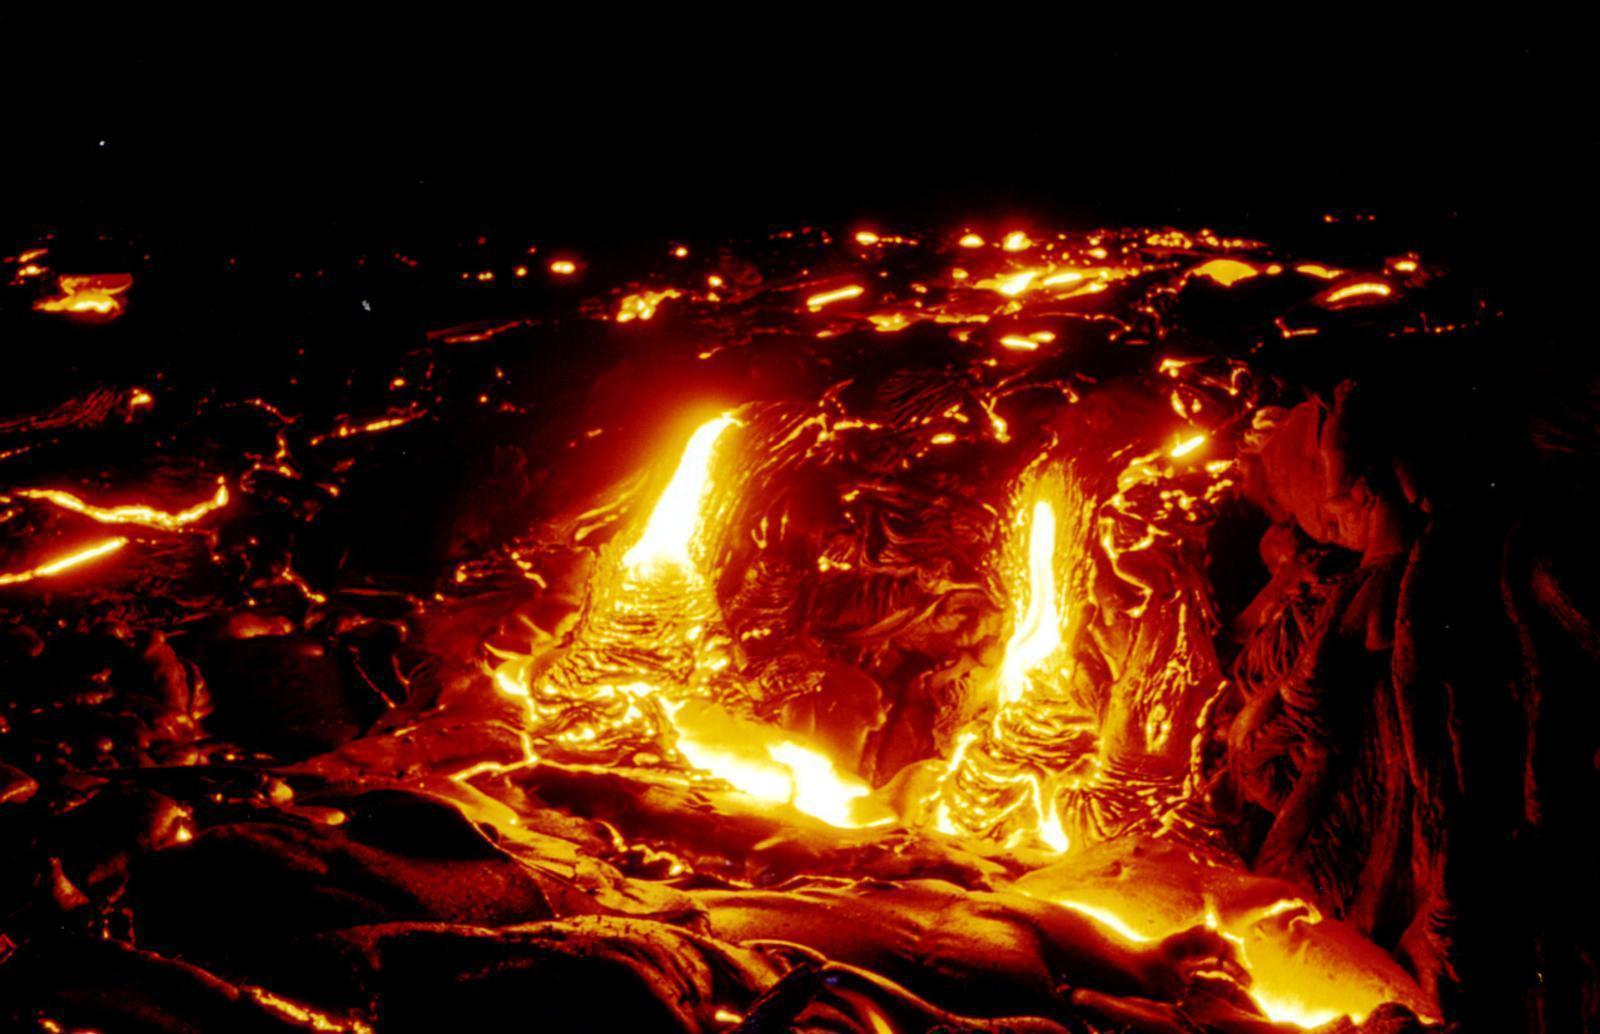 Hot lava free desktop background wallpaper image